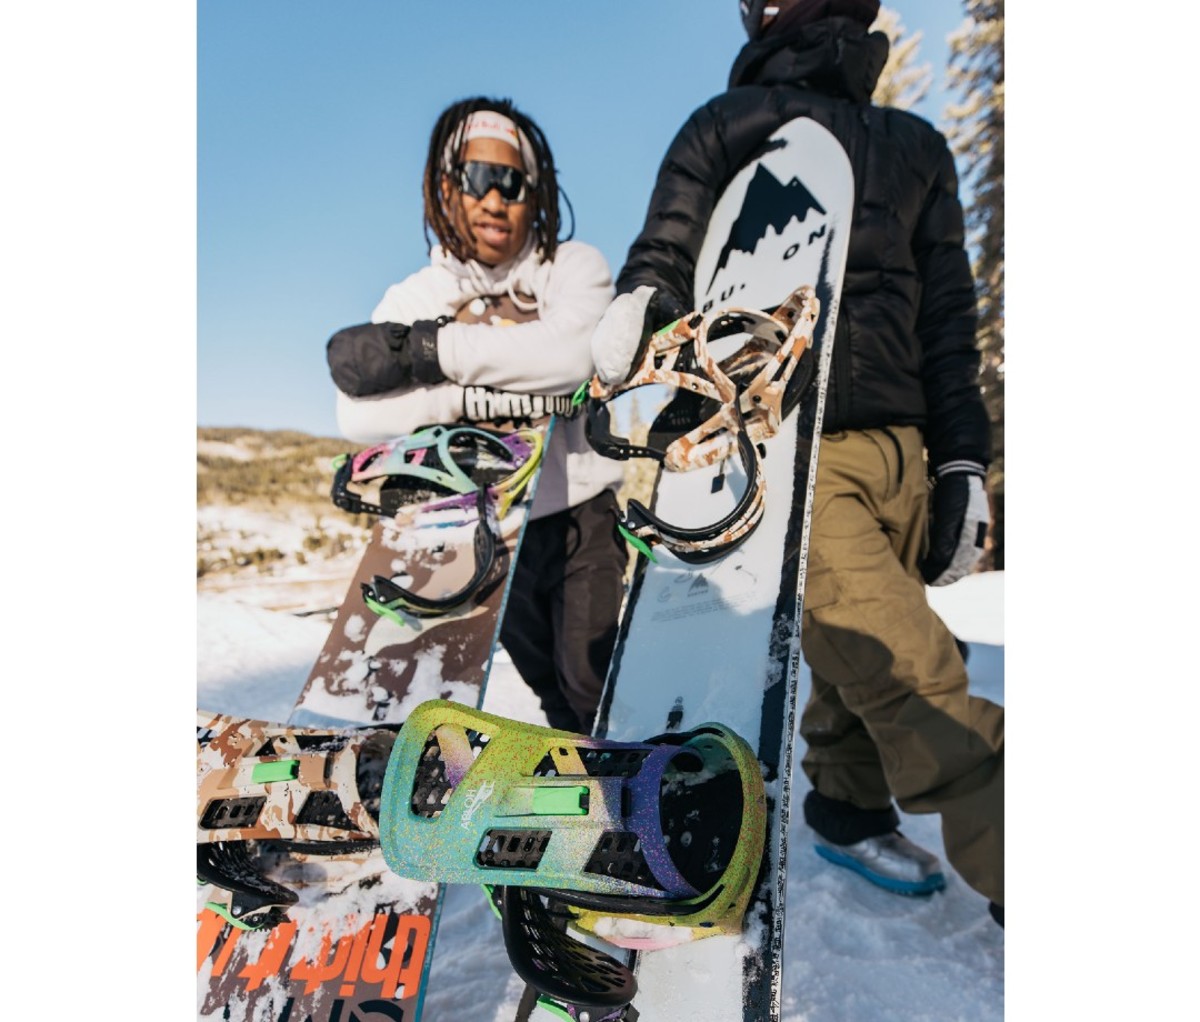 Black man in snowboard gear standing in front of boards